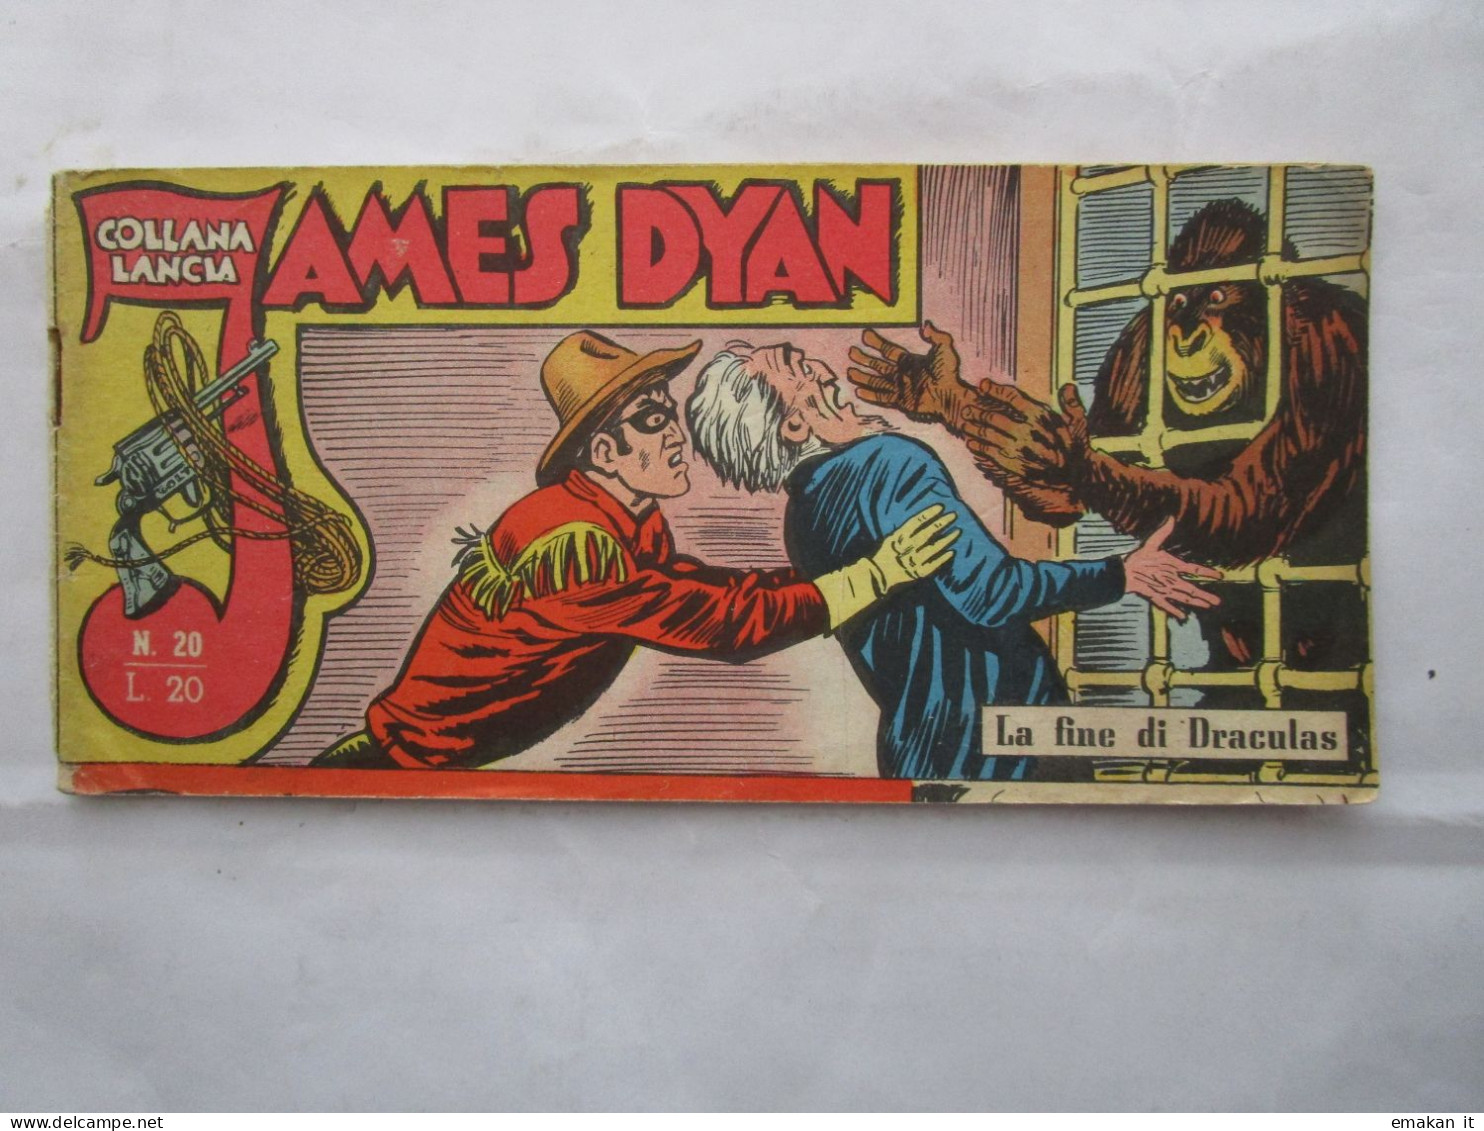 # JAMES DYAN  N 20 / 1960 COLLANA LANCIA  ED. DARDO - First Editions